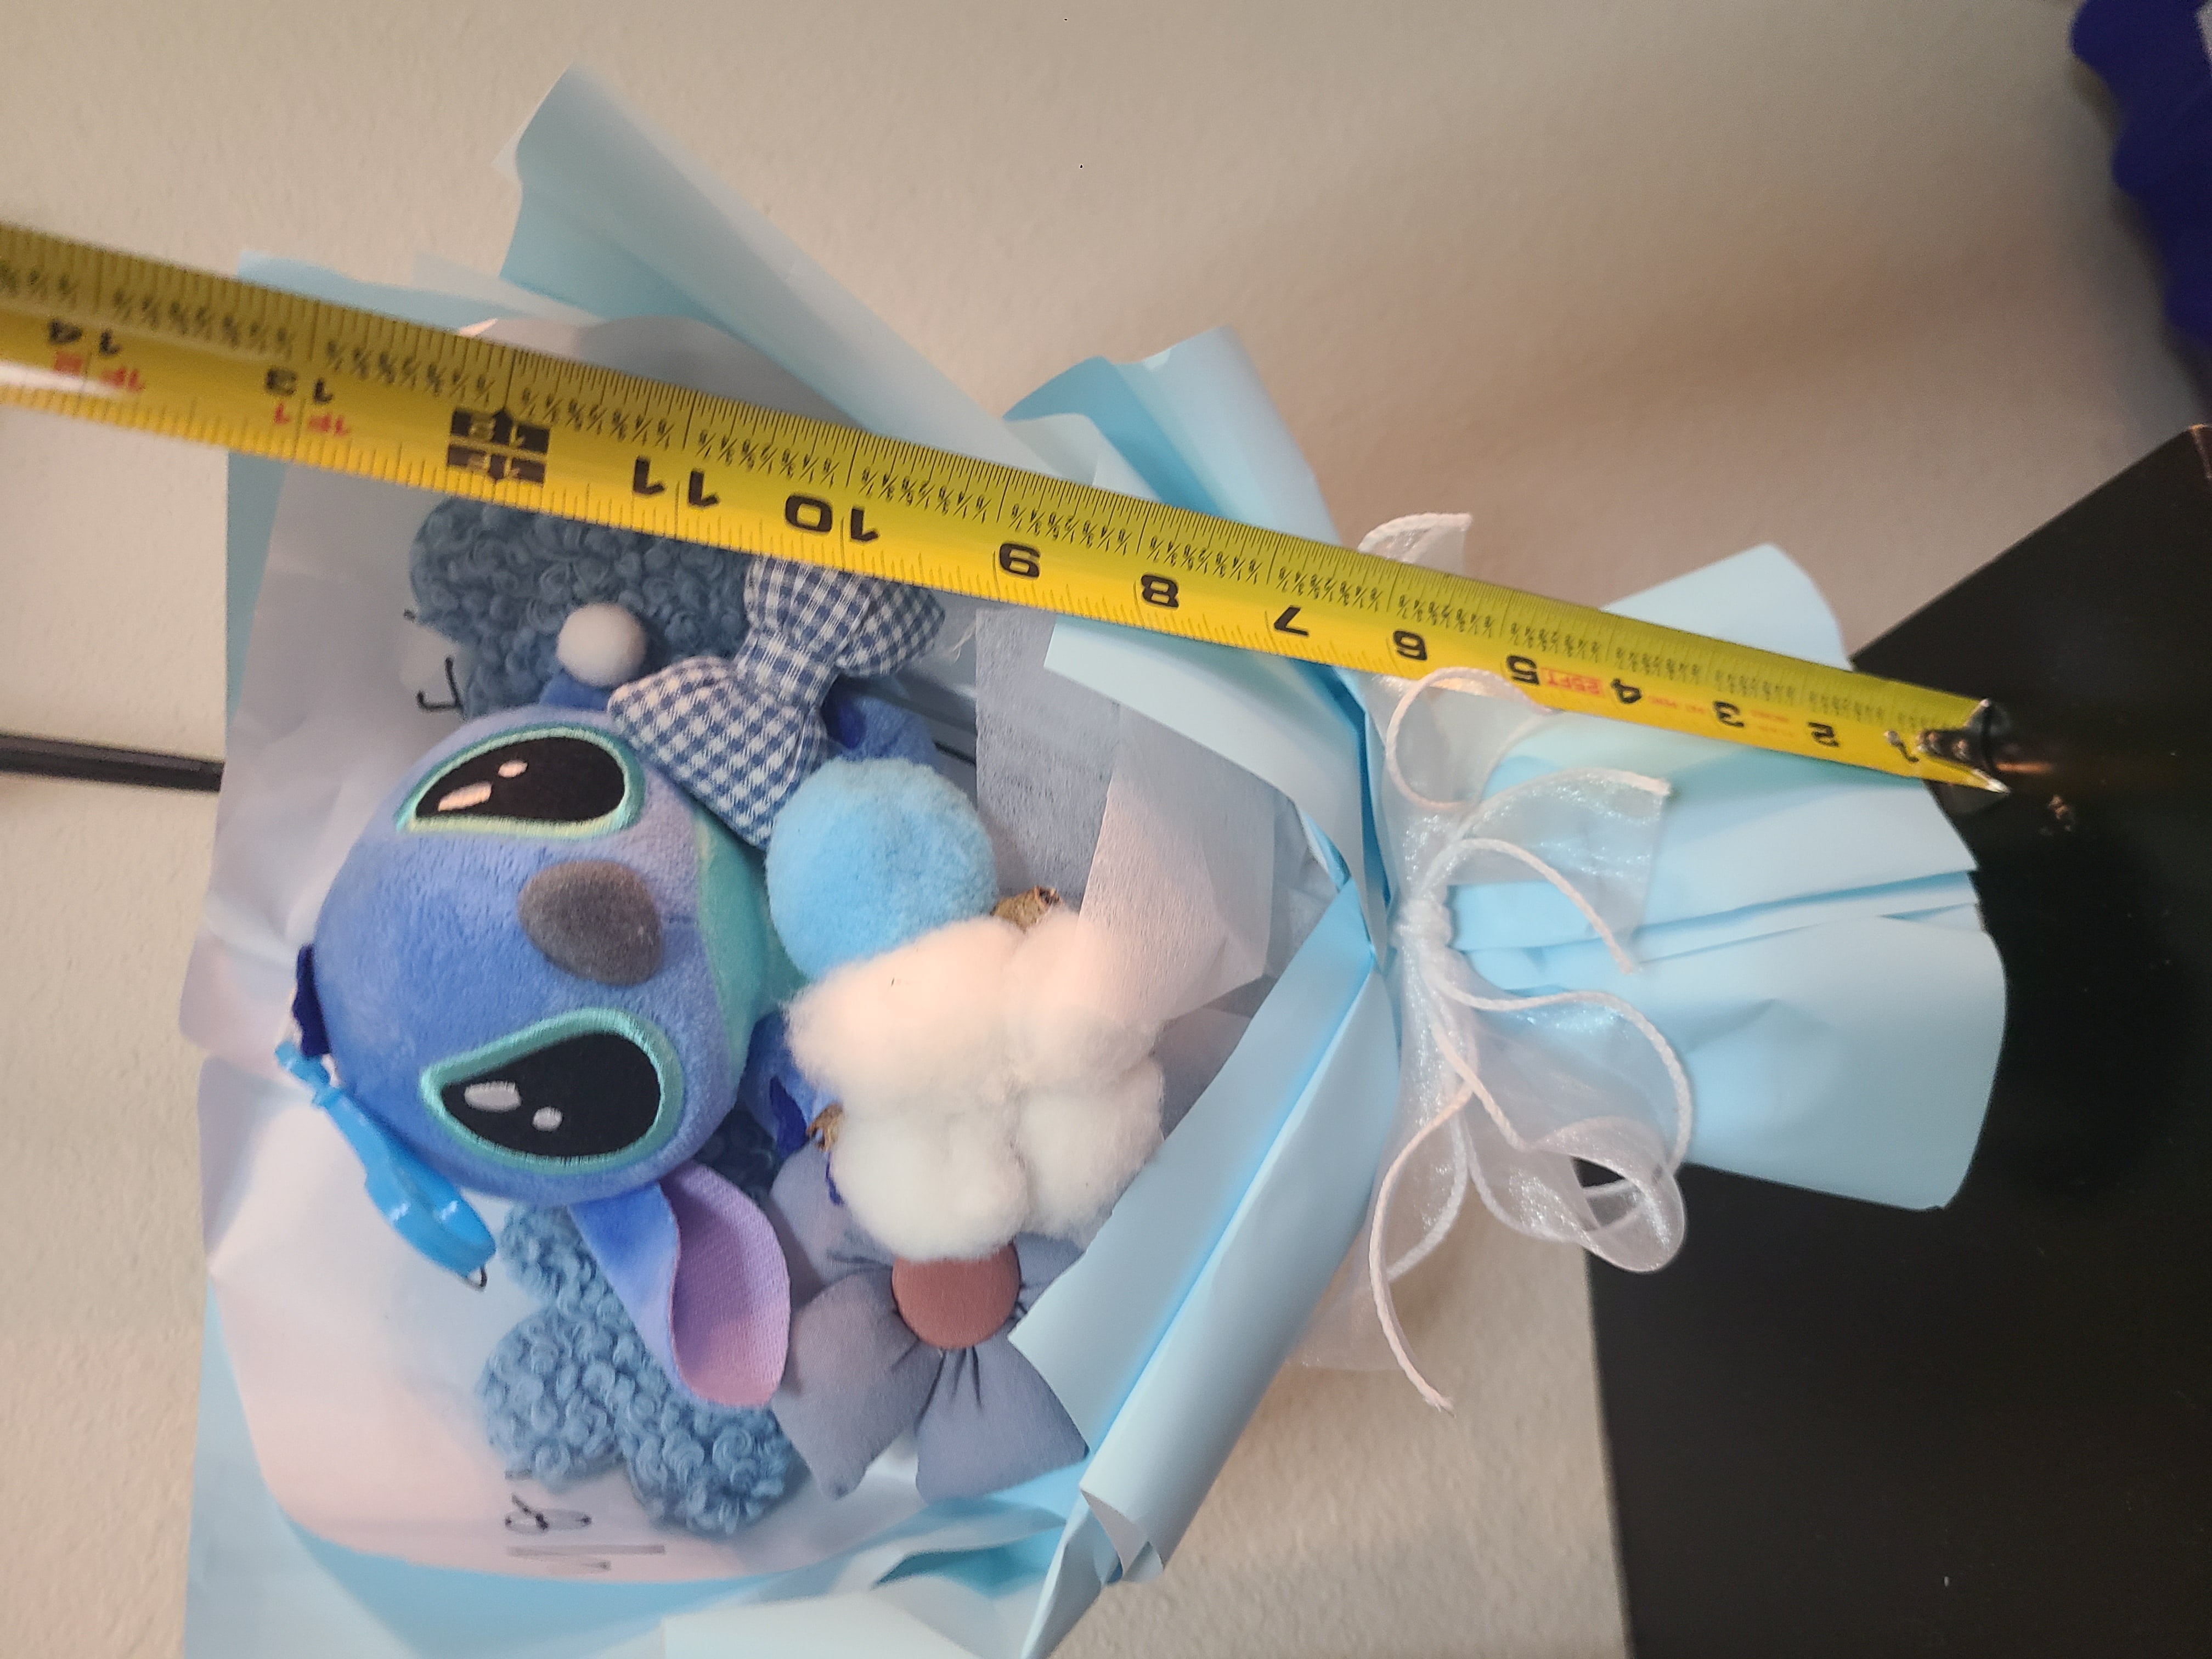 Personalized Disney Stitch Plush, Birthday Gift, Birth Announcement, Kids  Gift, Graduation Gift 